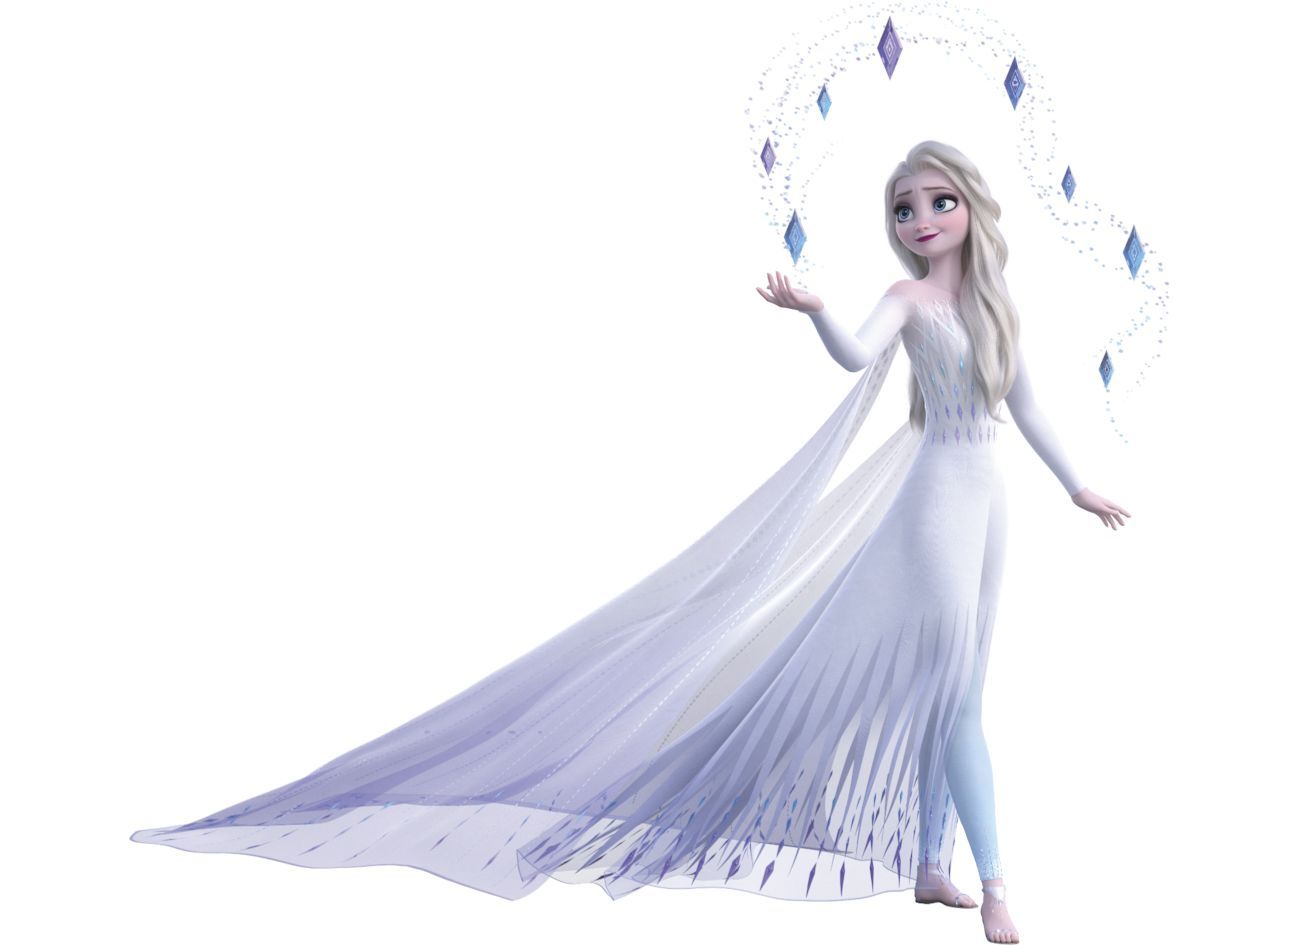 Frozen 2 Elsa White Dress Wallpaper Free Frozen 2 Elsa White Dress Background